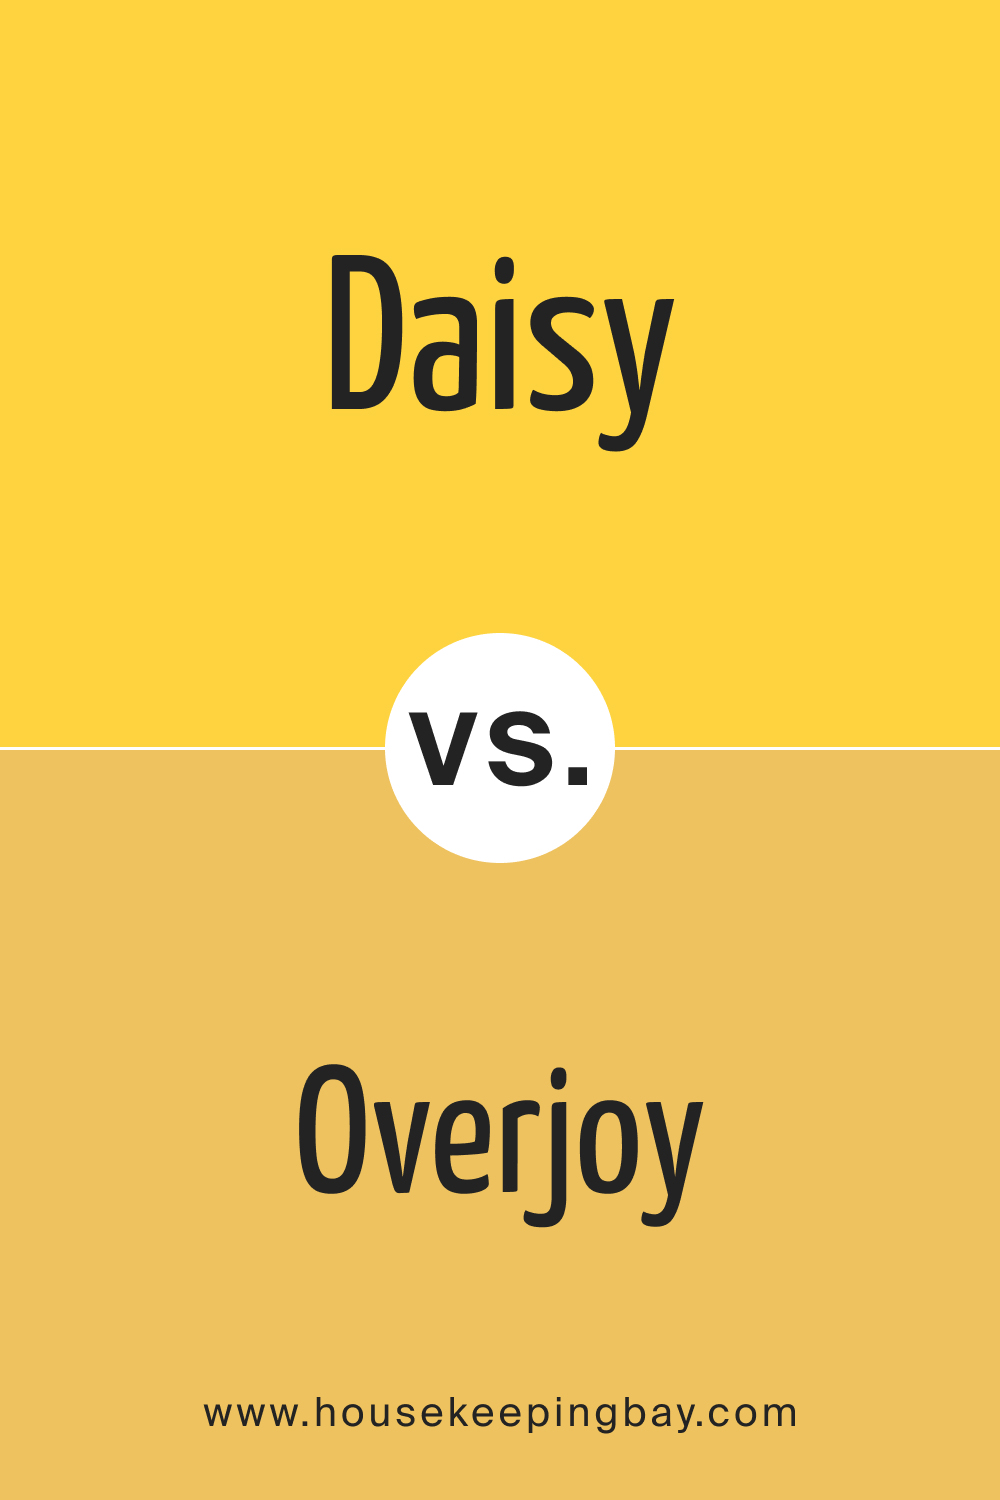 Daisy SW 6910 vs SW 6689 Overjoy